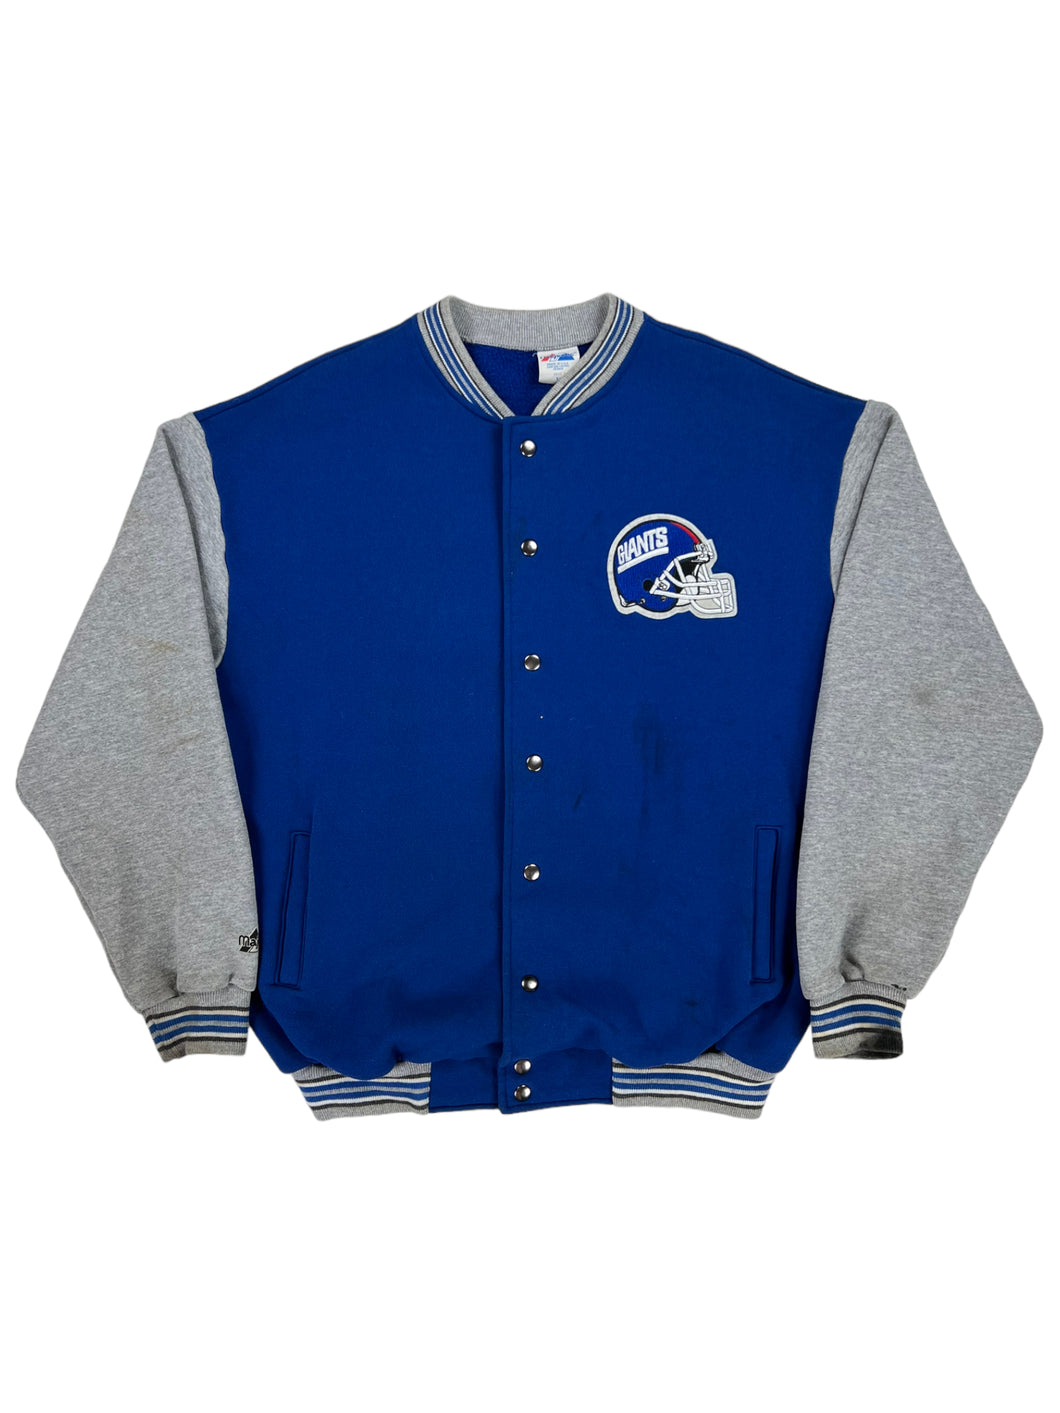 Vintage 90s Majestic New York Giants varsity jacket (XL)